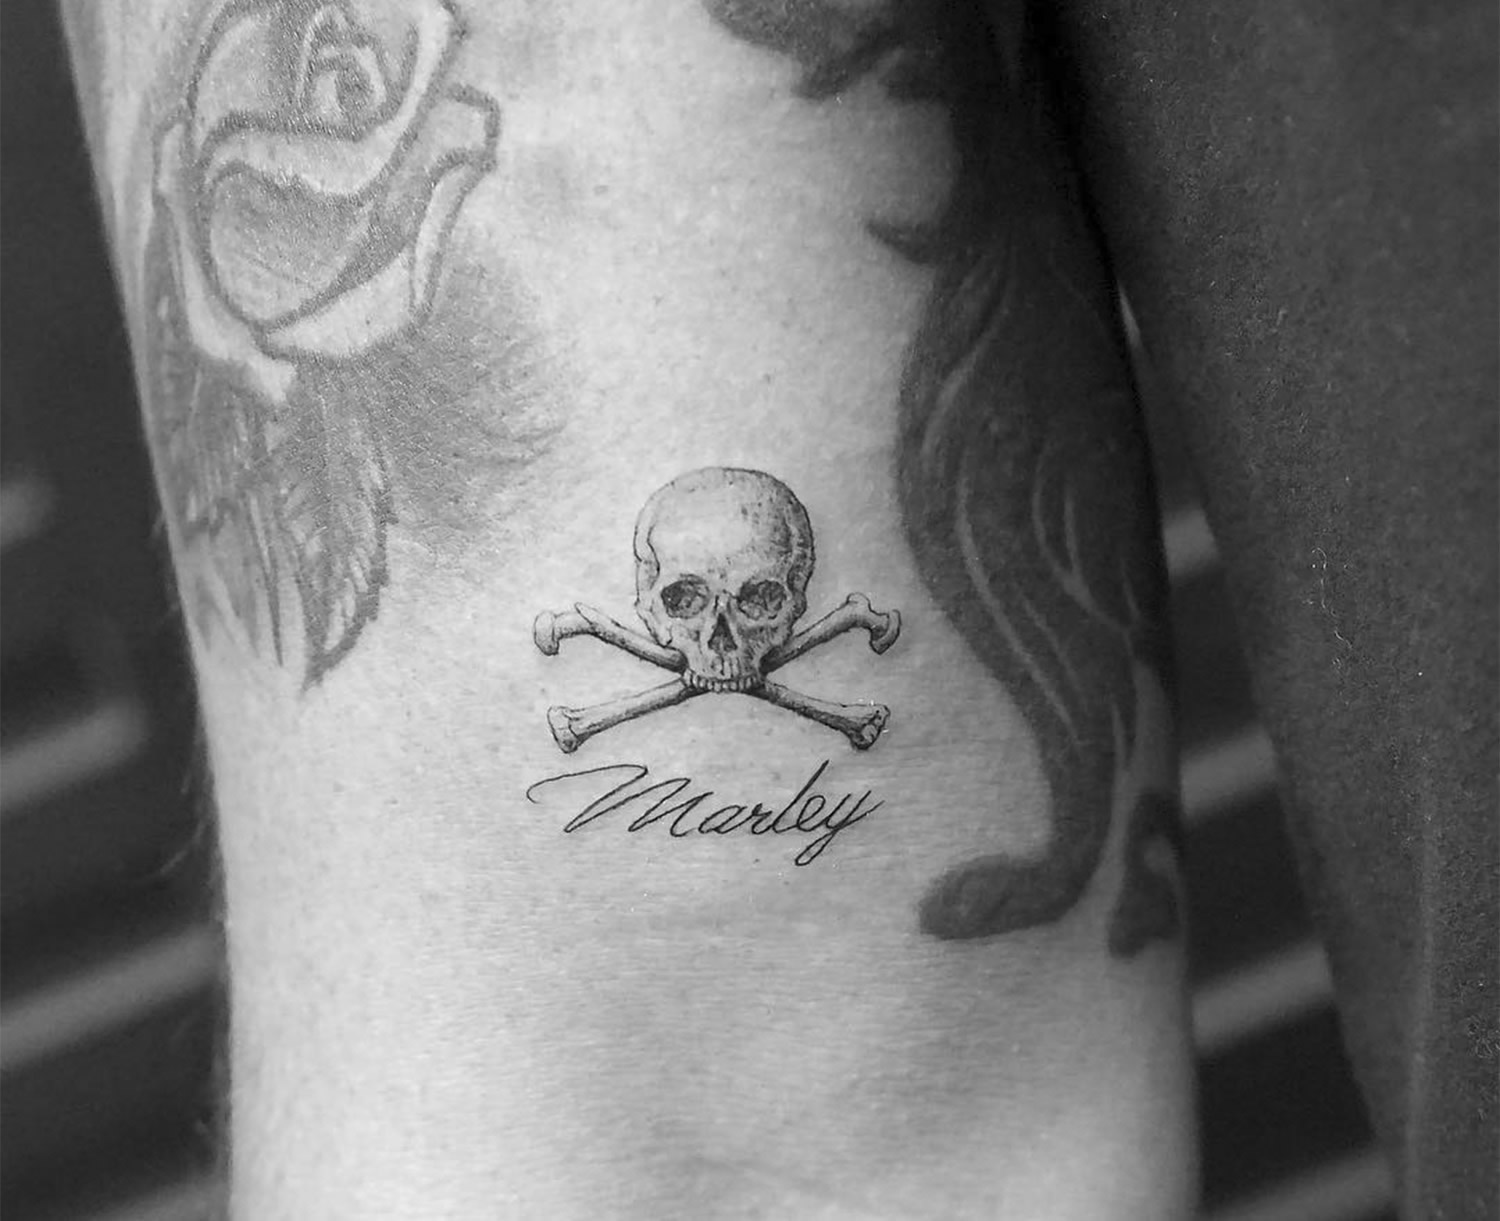 RIP tattoo, crossbones, name marley by mr k